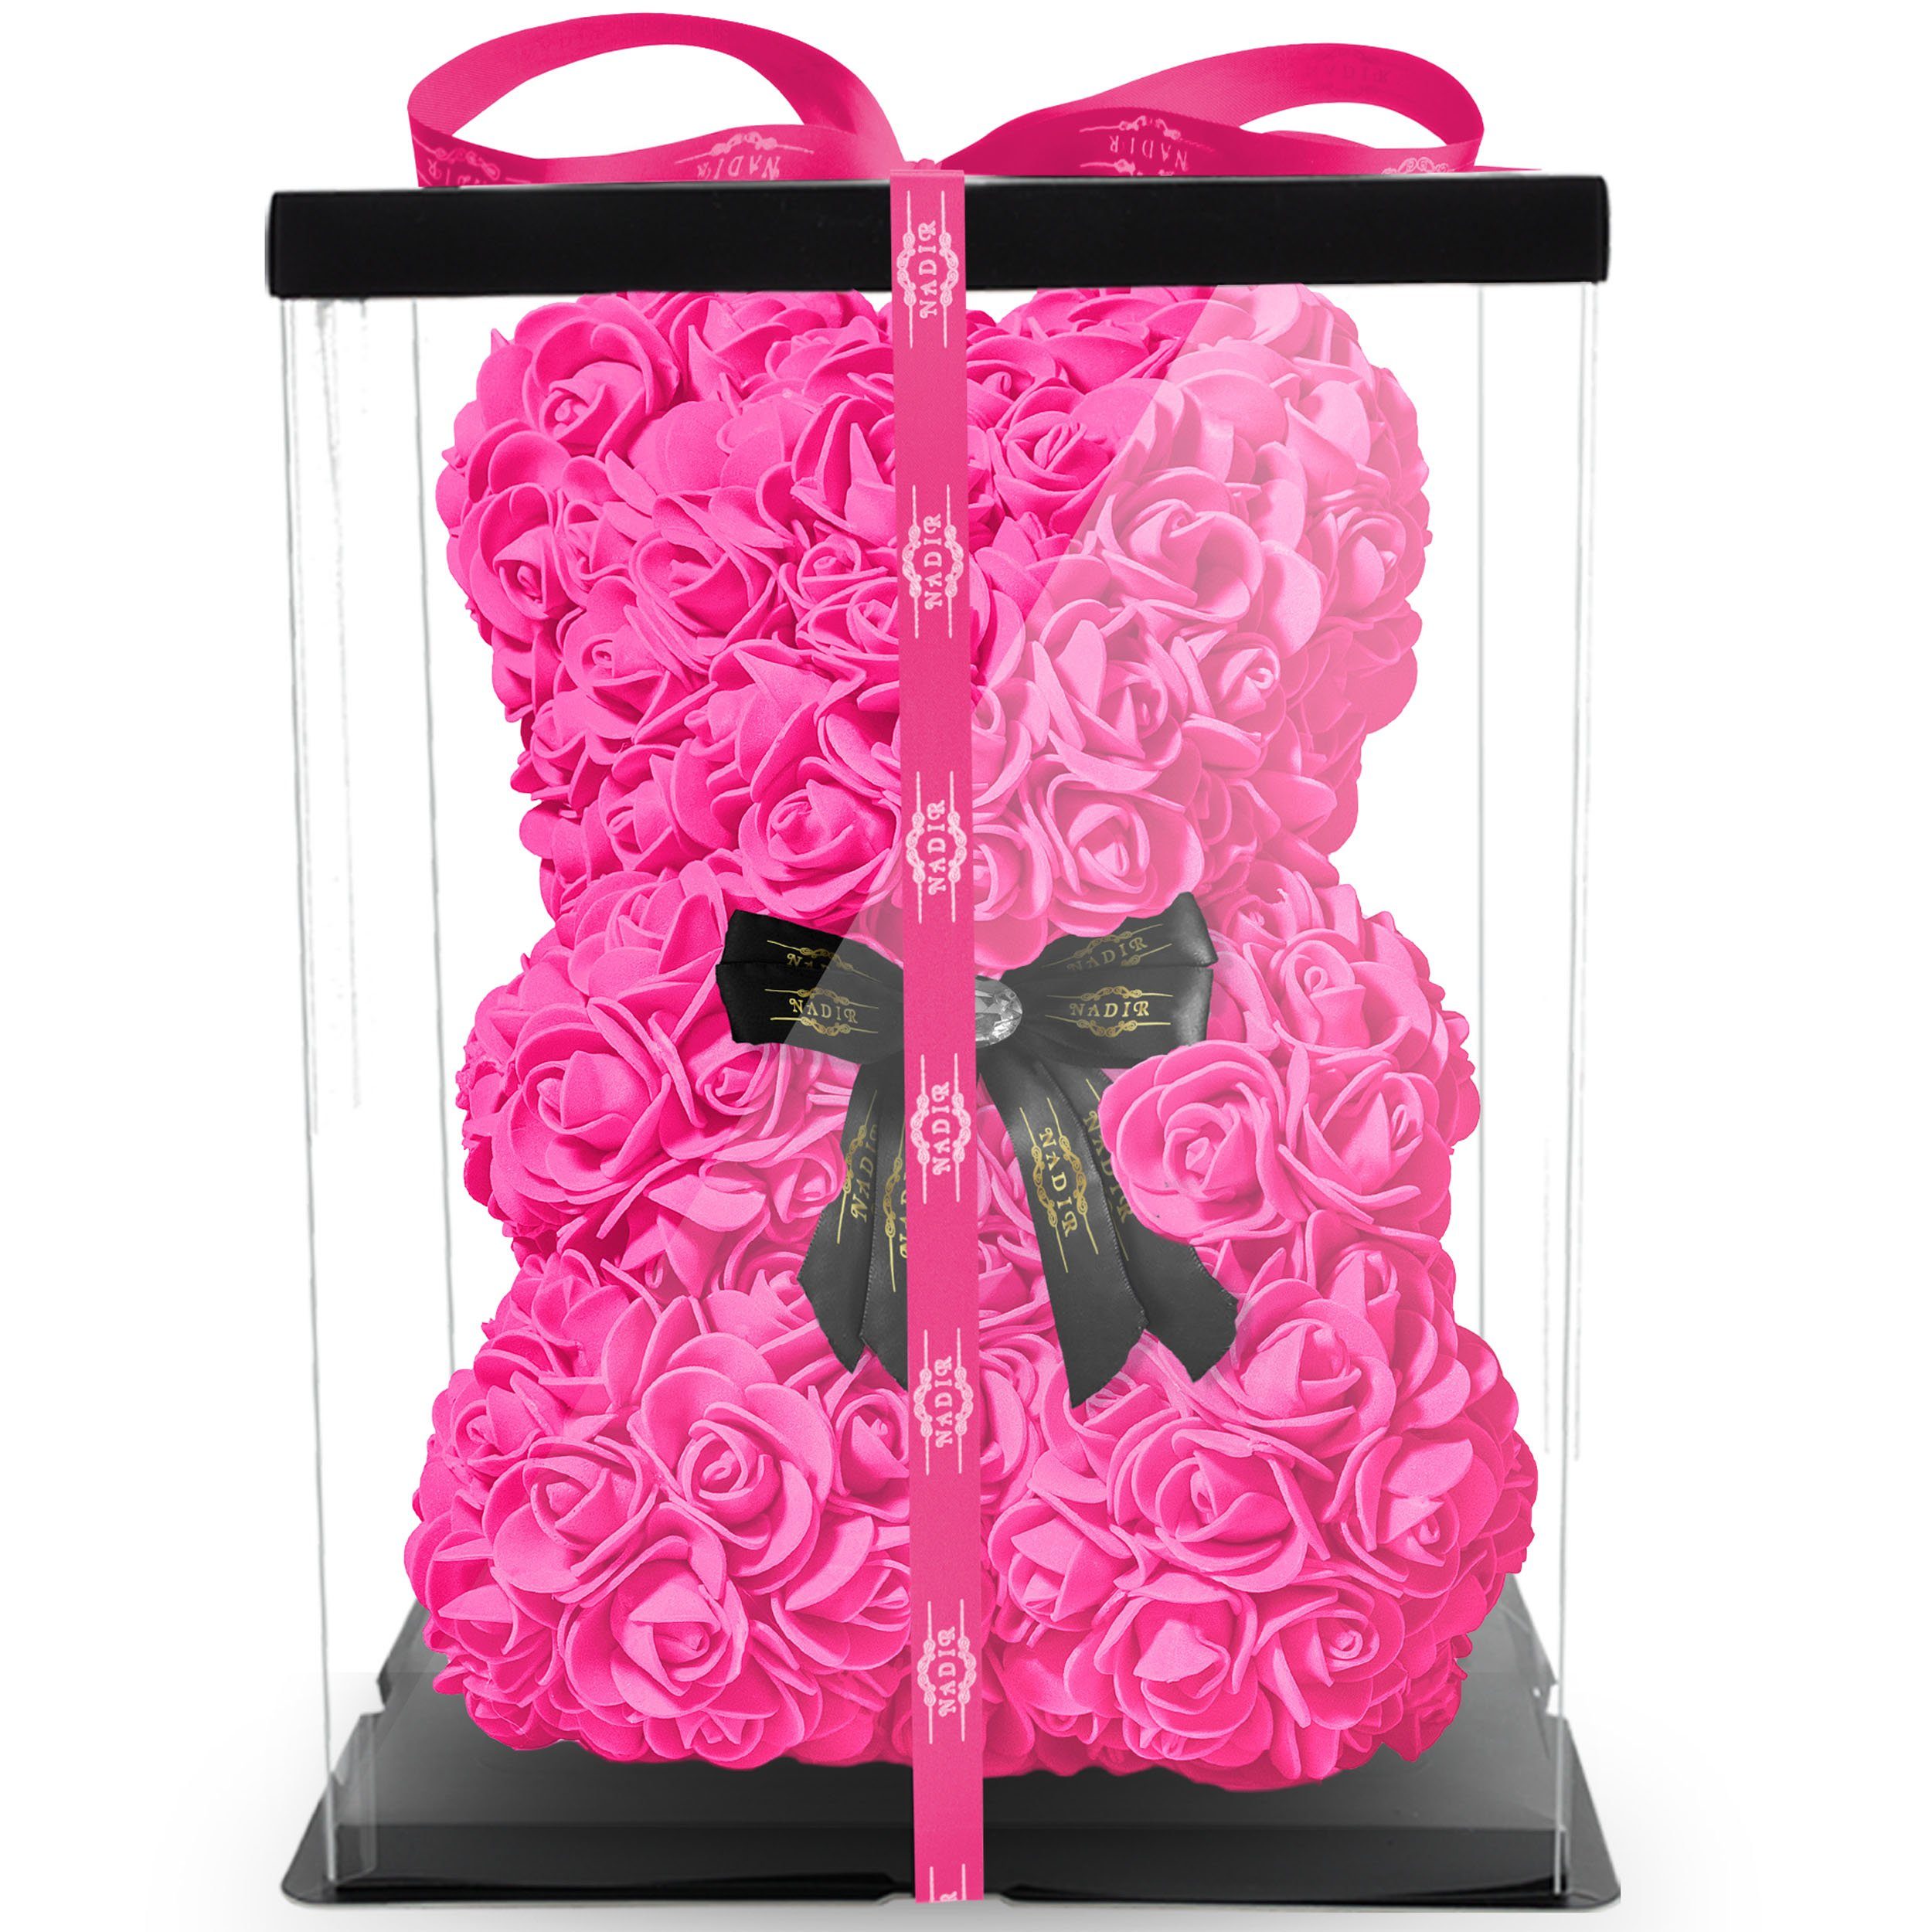 Kunstblume NADIR Rosenbär 25 cm mit Schleife / inklusive vorverpackter  Geschenkbox/ Valentinstag Muttertag Geburtstag Jahrestag Infinity Rosebear  Bär aus Rosen Flower Teddy Teddybär Blütenbär Künstliche Pflanze, NADIR